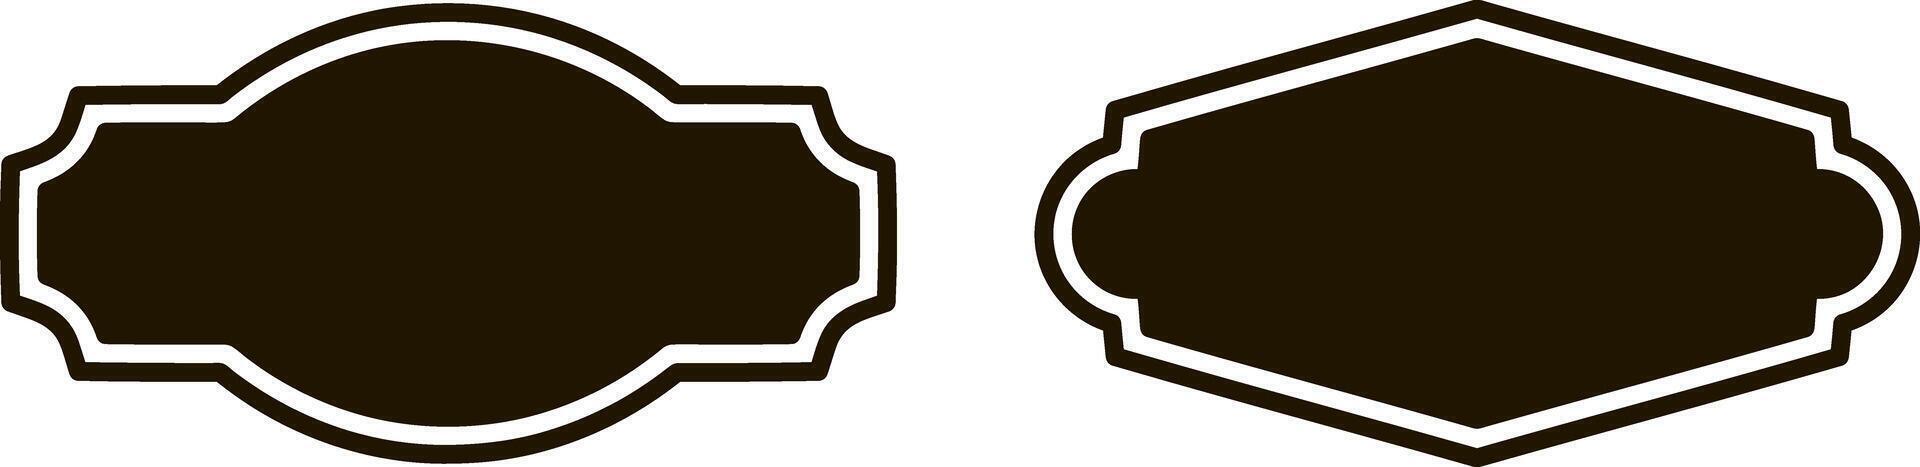 Schablone Abzeichen Symbol Rahmen Rand Vektor Illustration